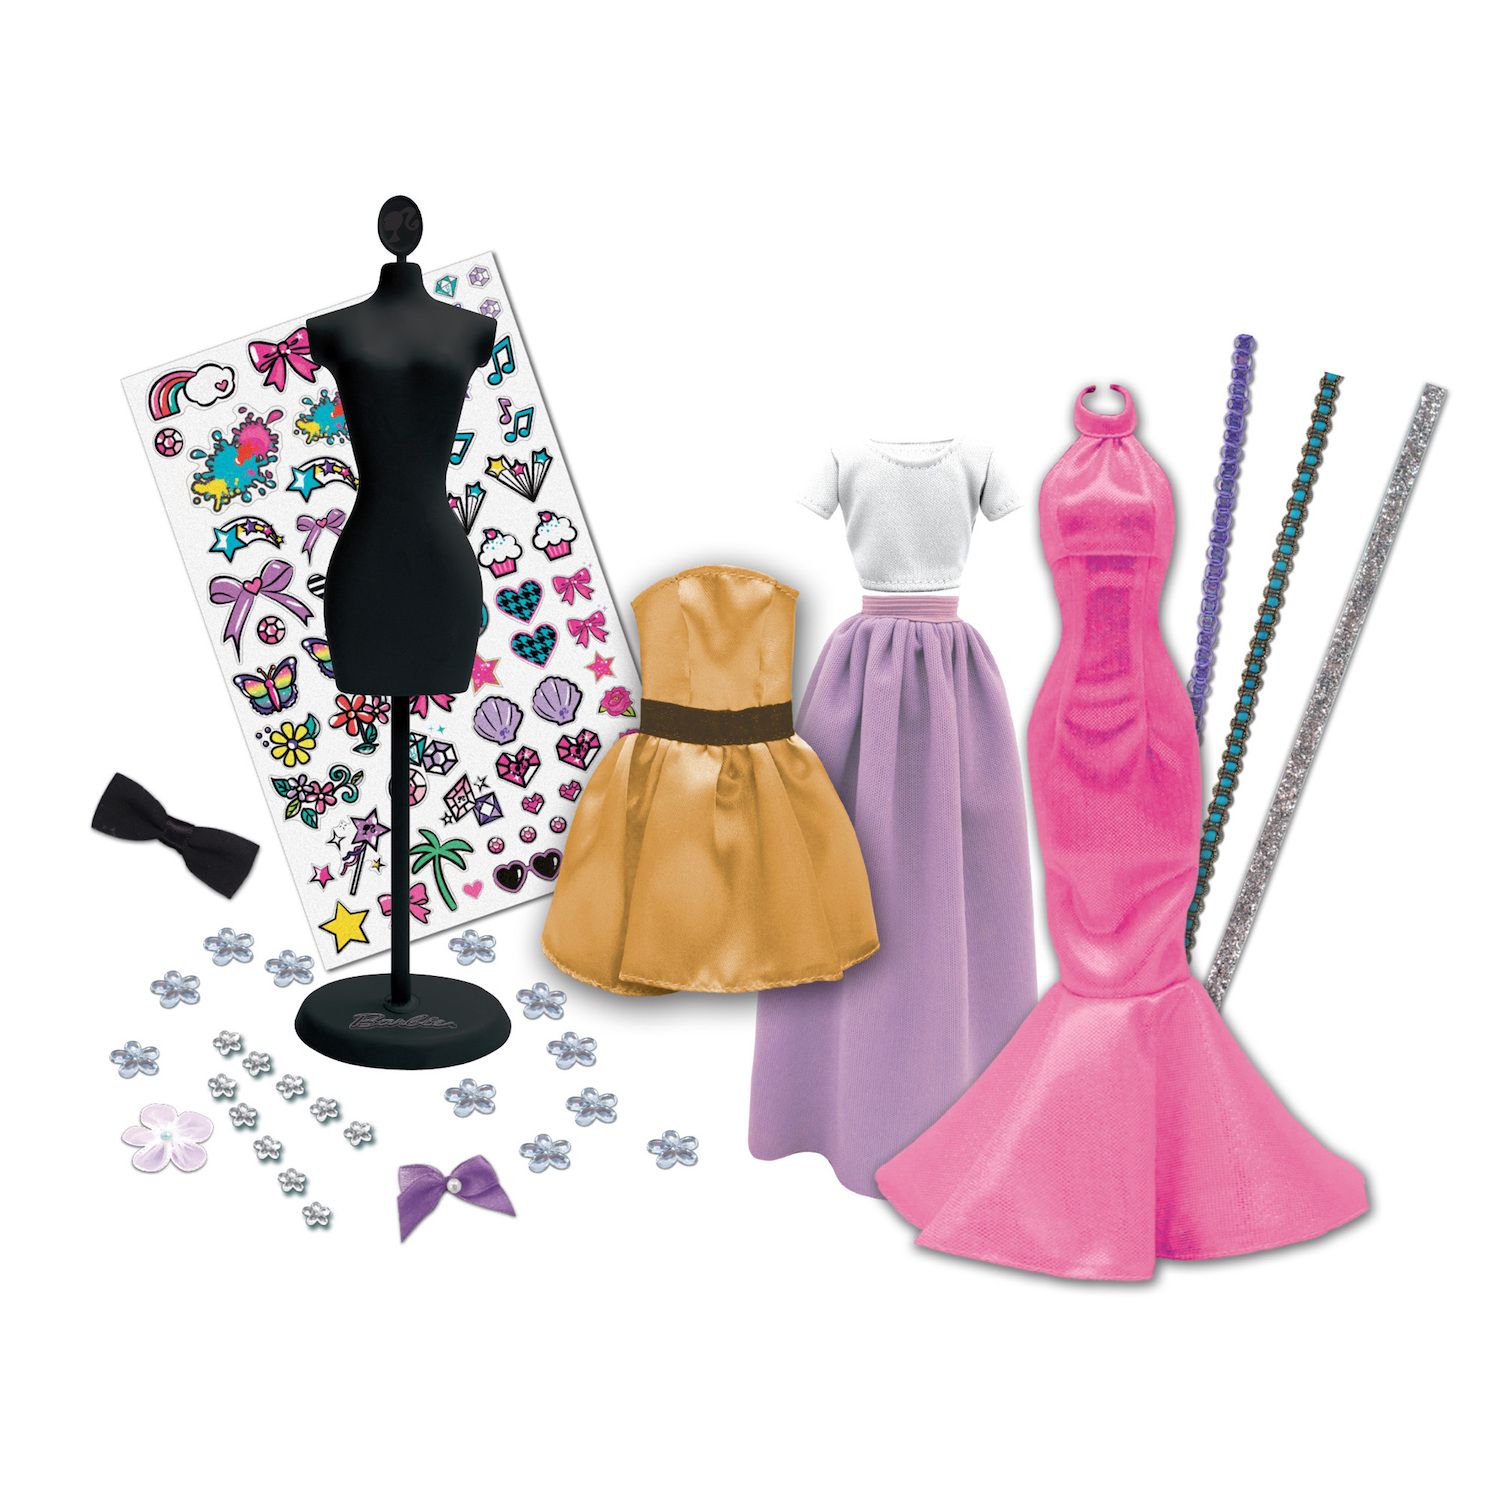 barbie fashion designer kit